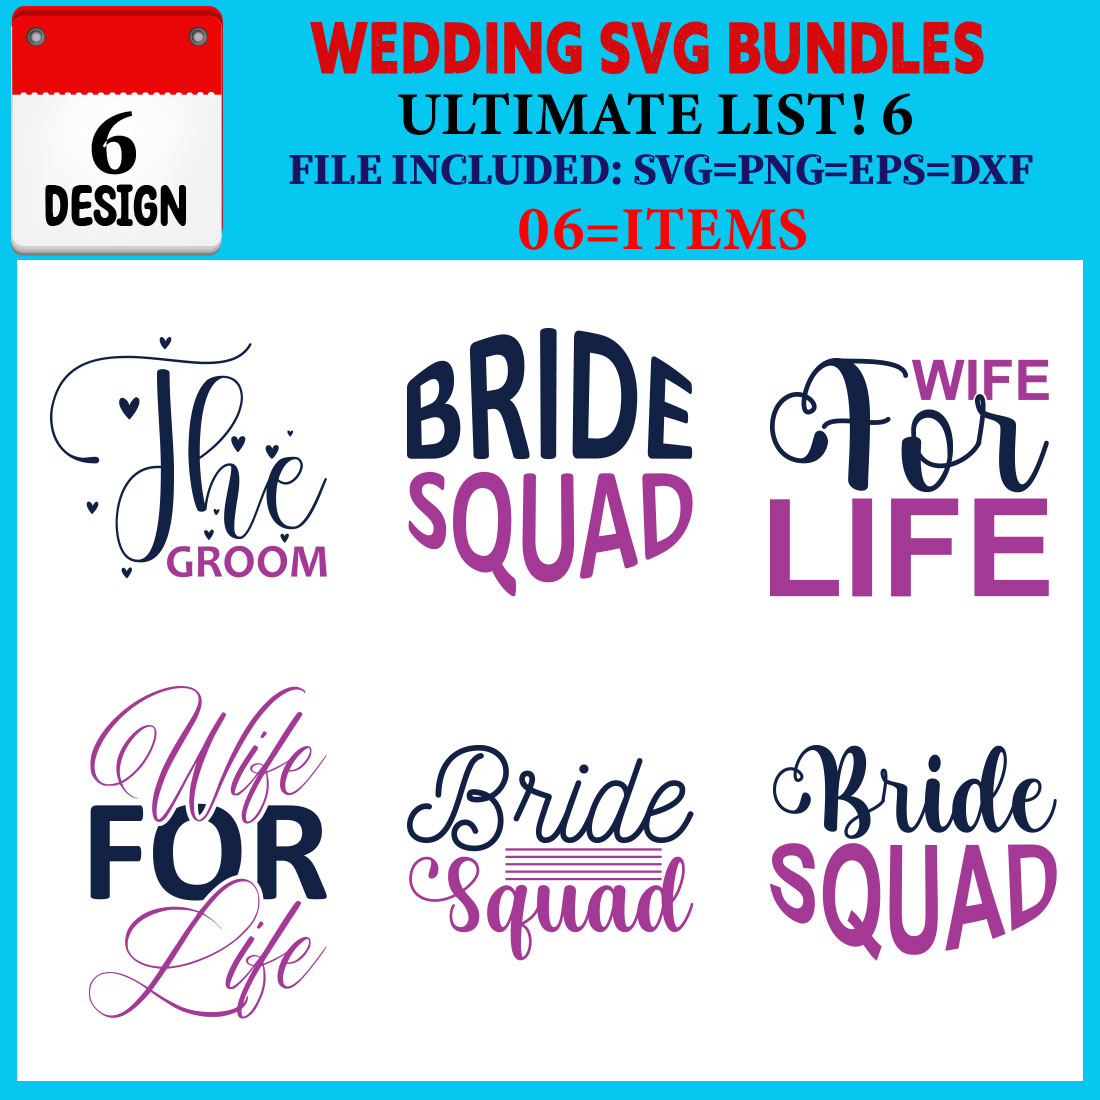 Wedding T-shirt Design Bundle Vol-05 cover image.